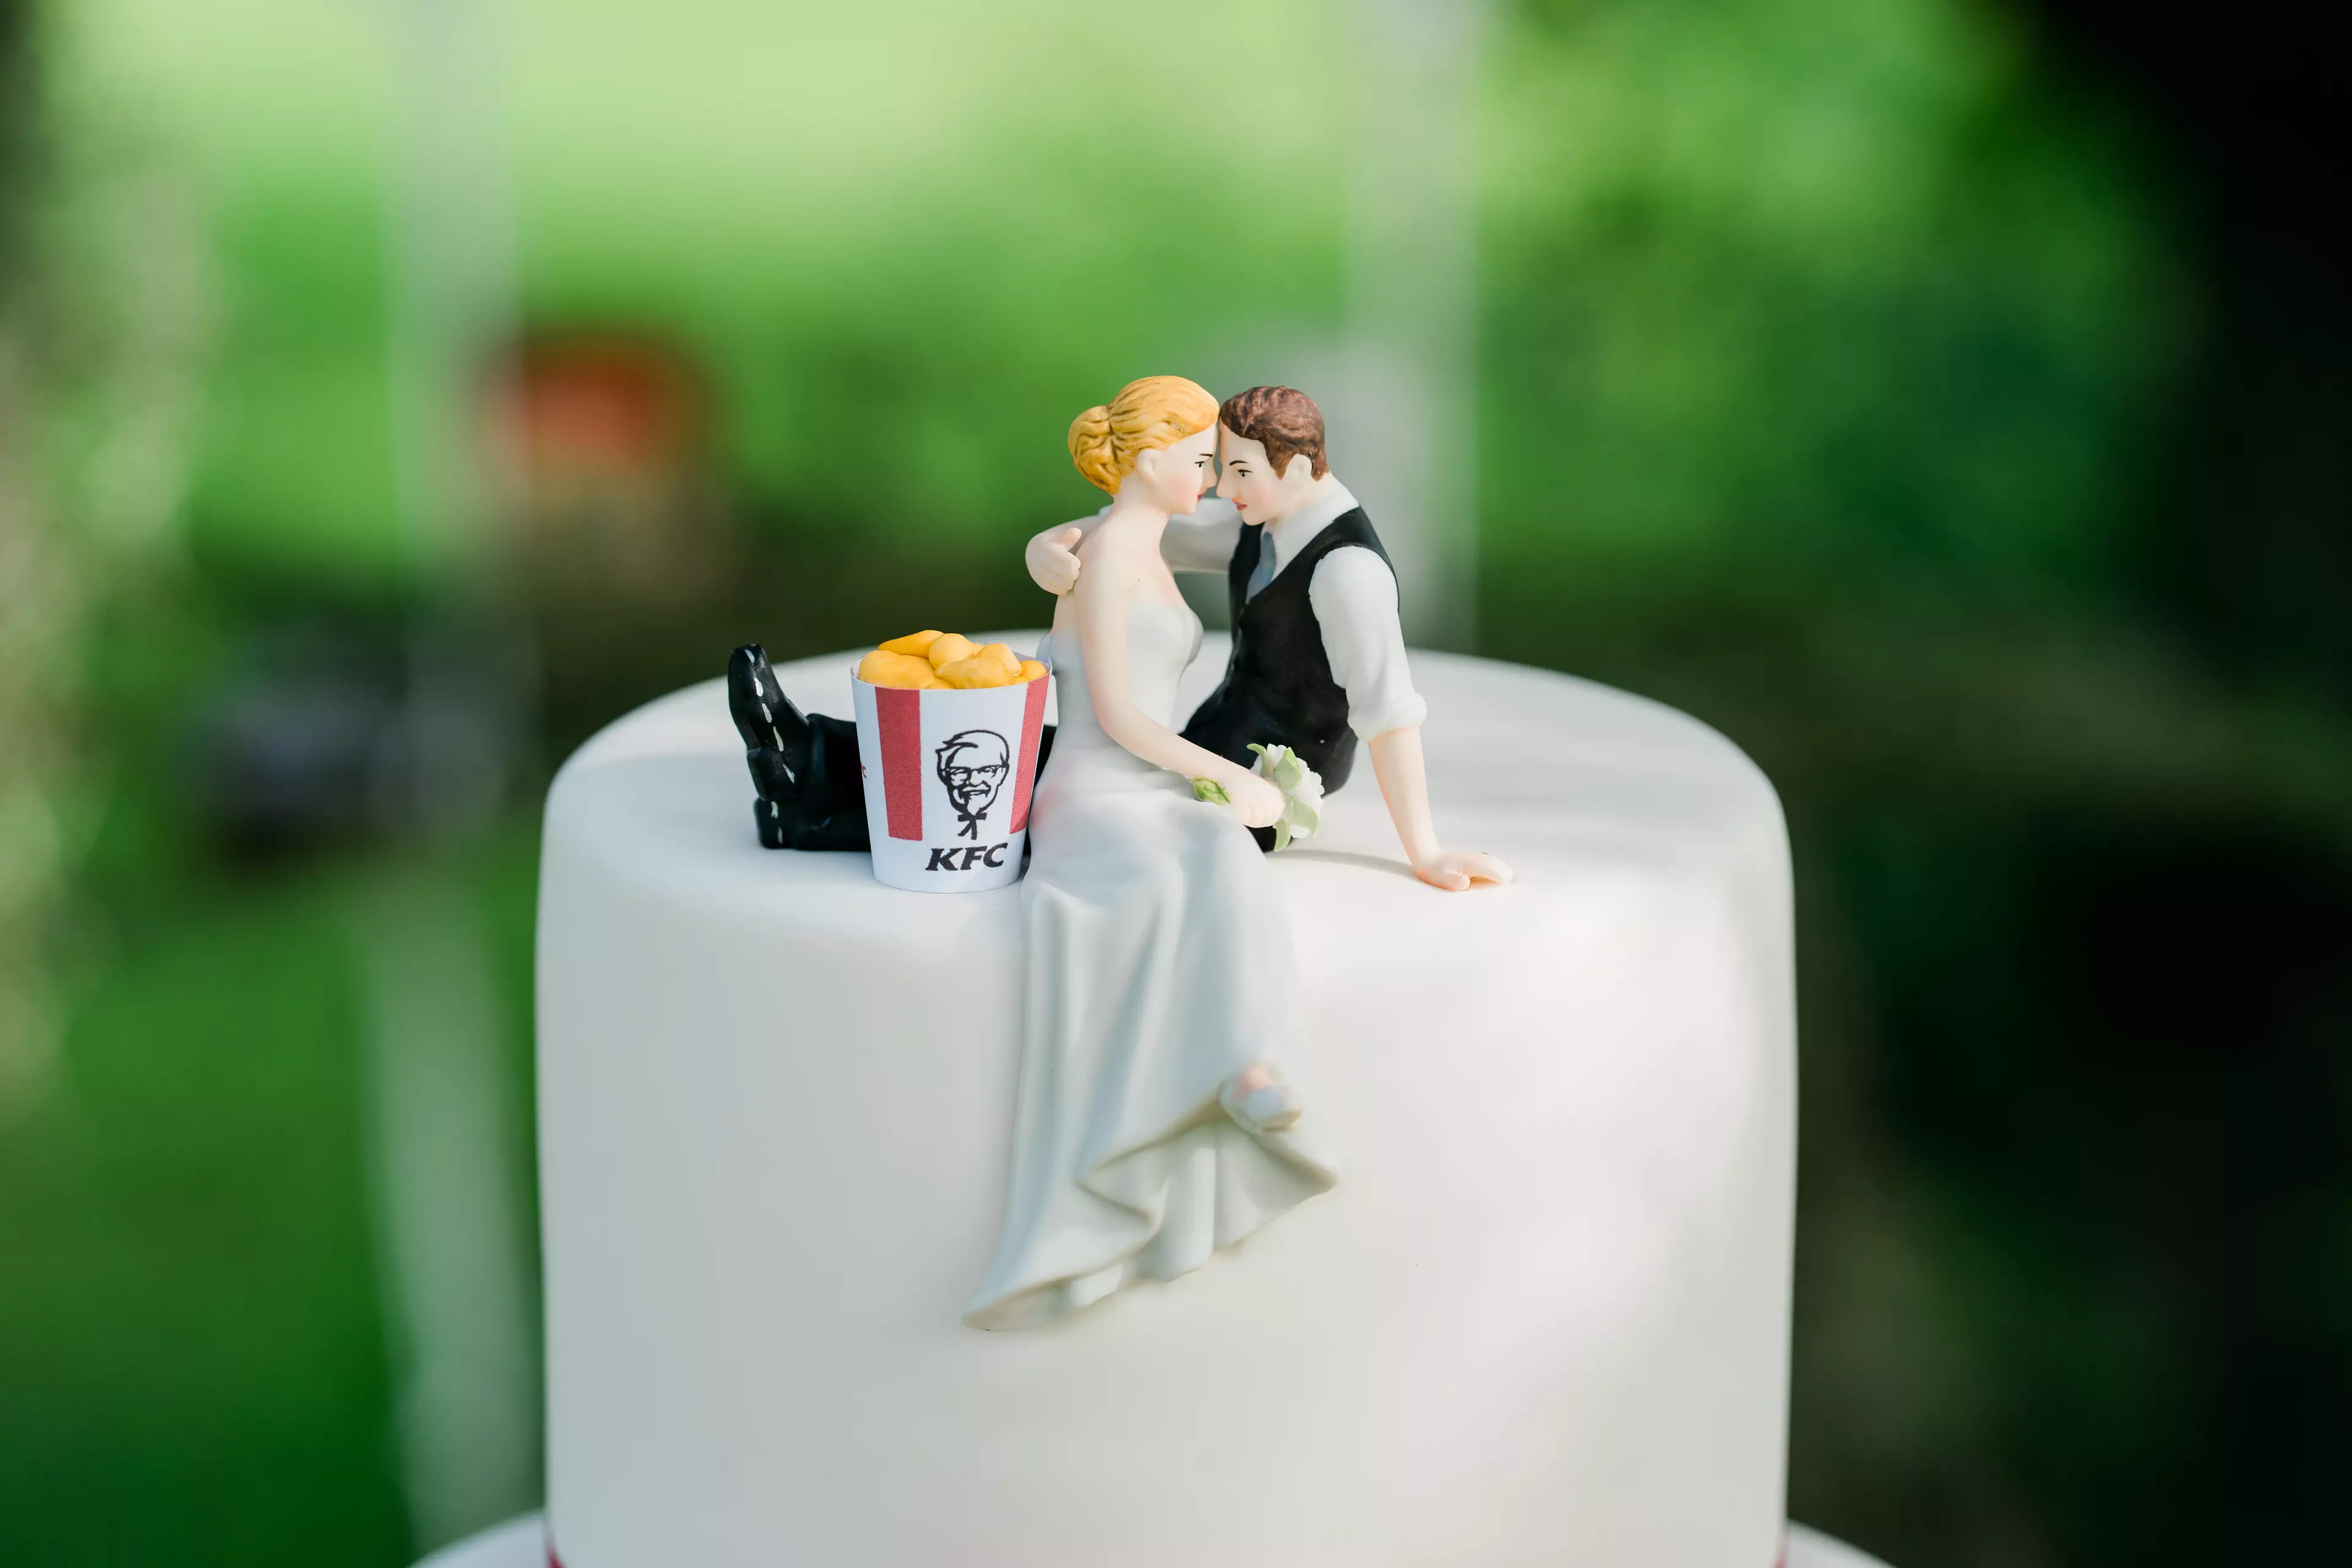 The couple's KFC-themed wedding cake.